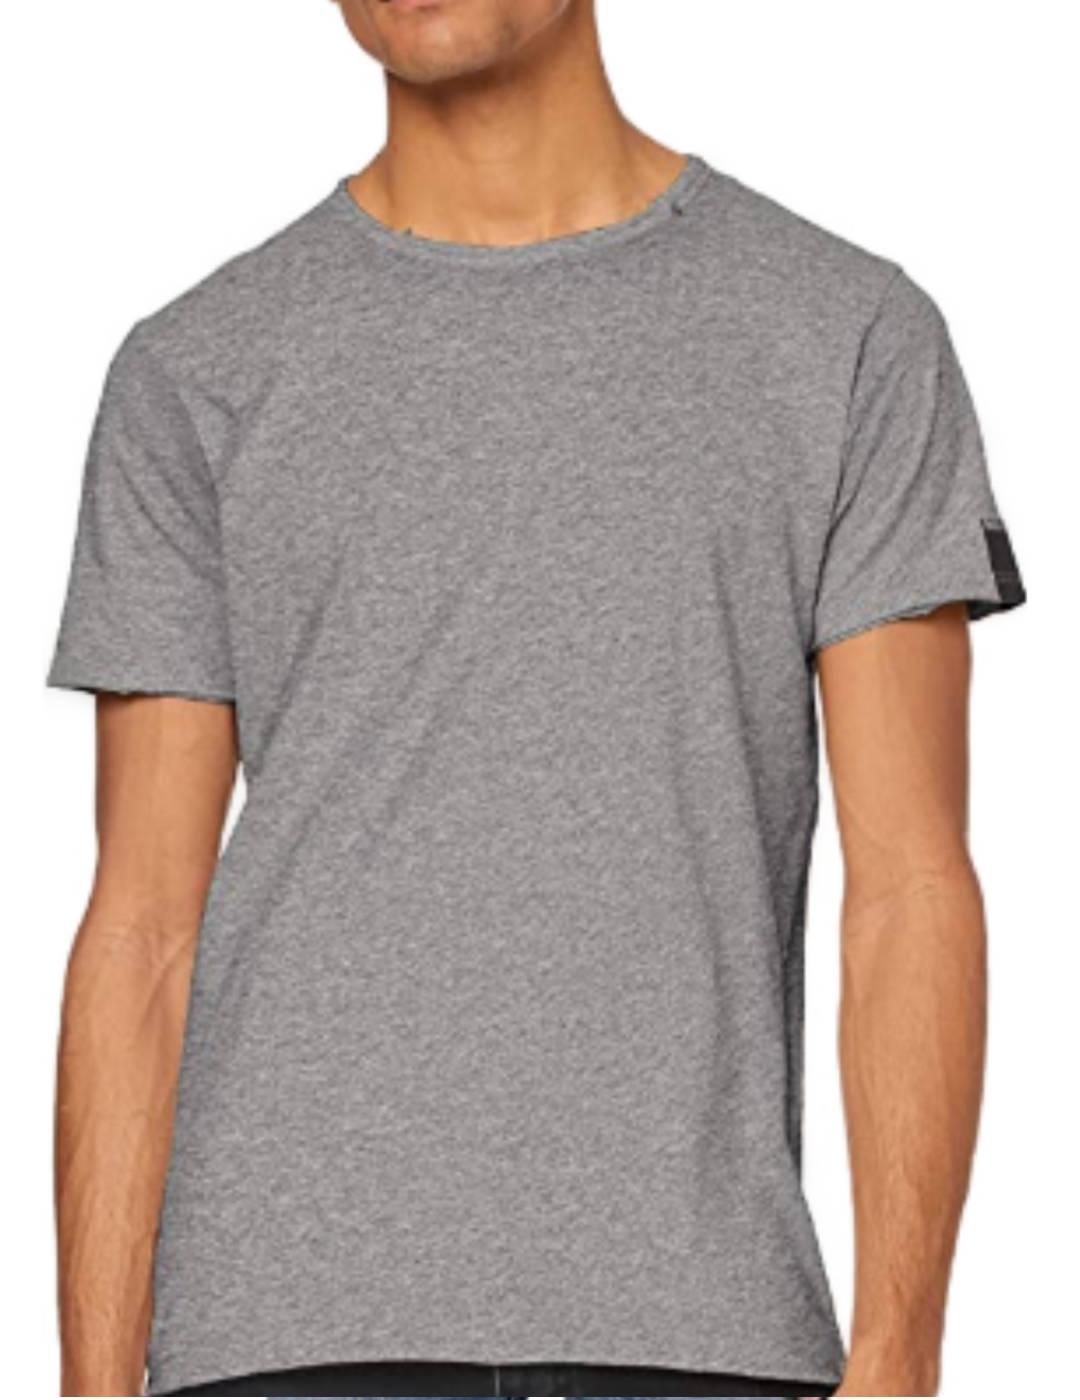 Camiseta básica Replay gris claro para hombre -b